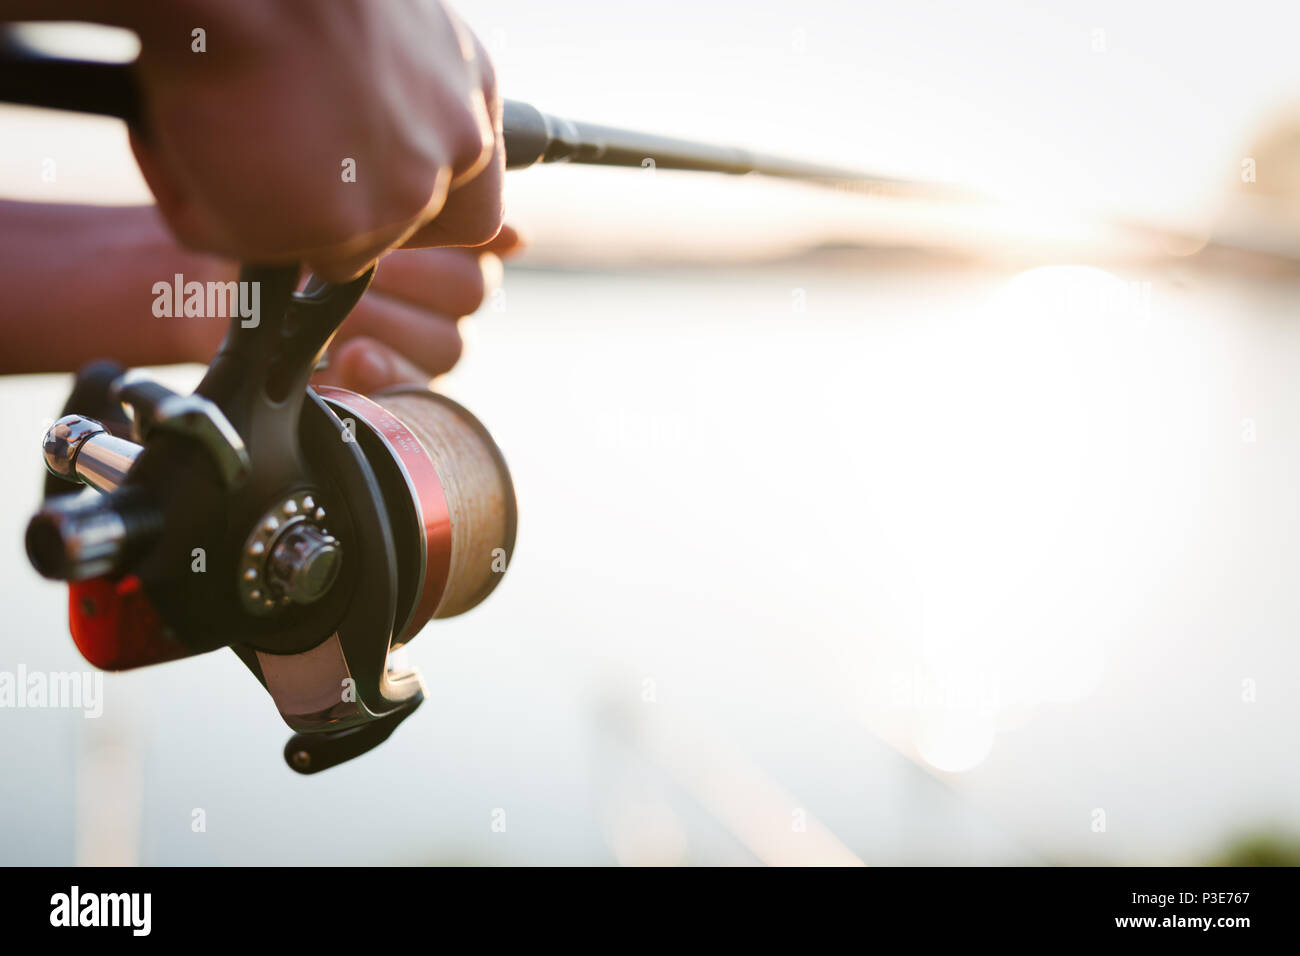 Fishing gear - fishing spinning, fishing line and sports equipment Stock  Photo - Alamy